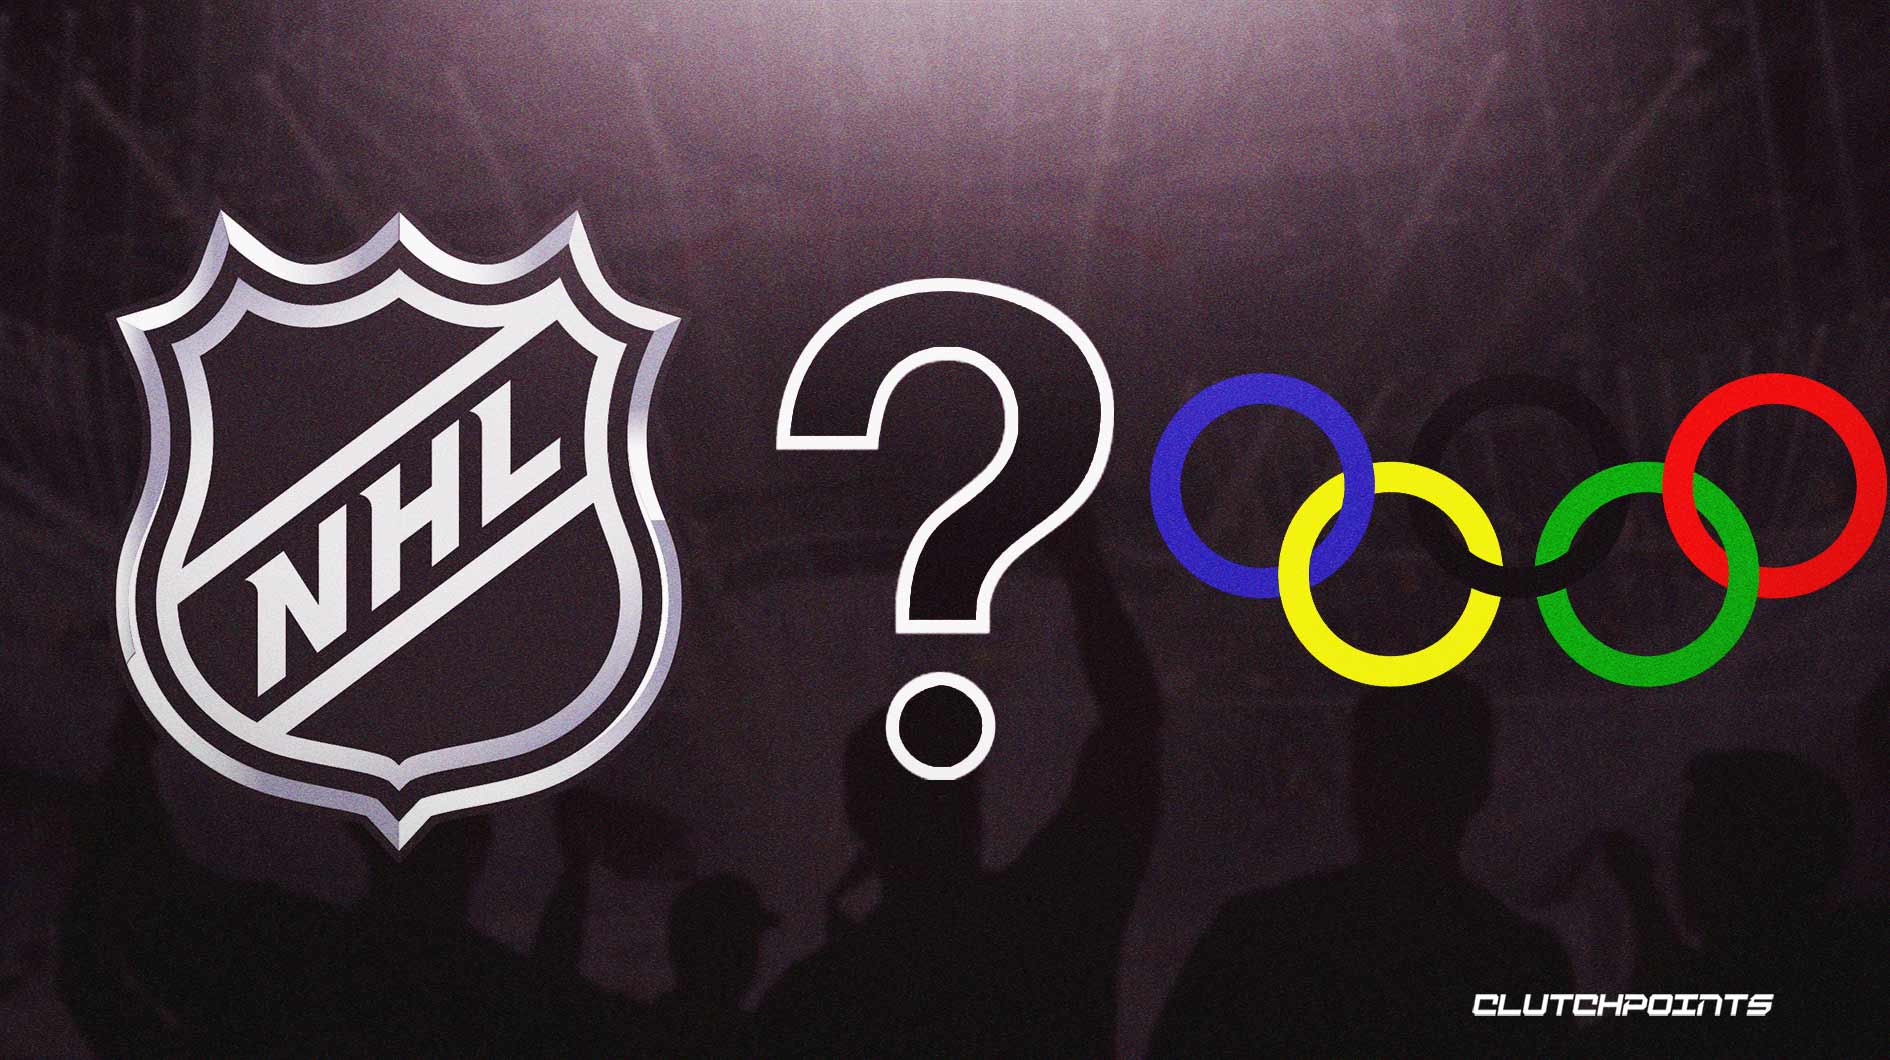 NHL logo next to the Olympic logo